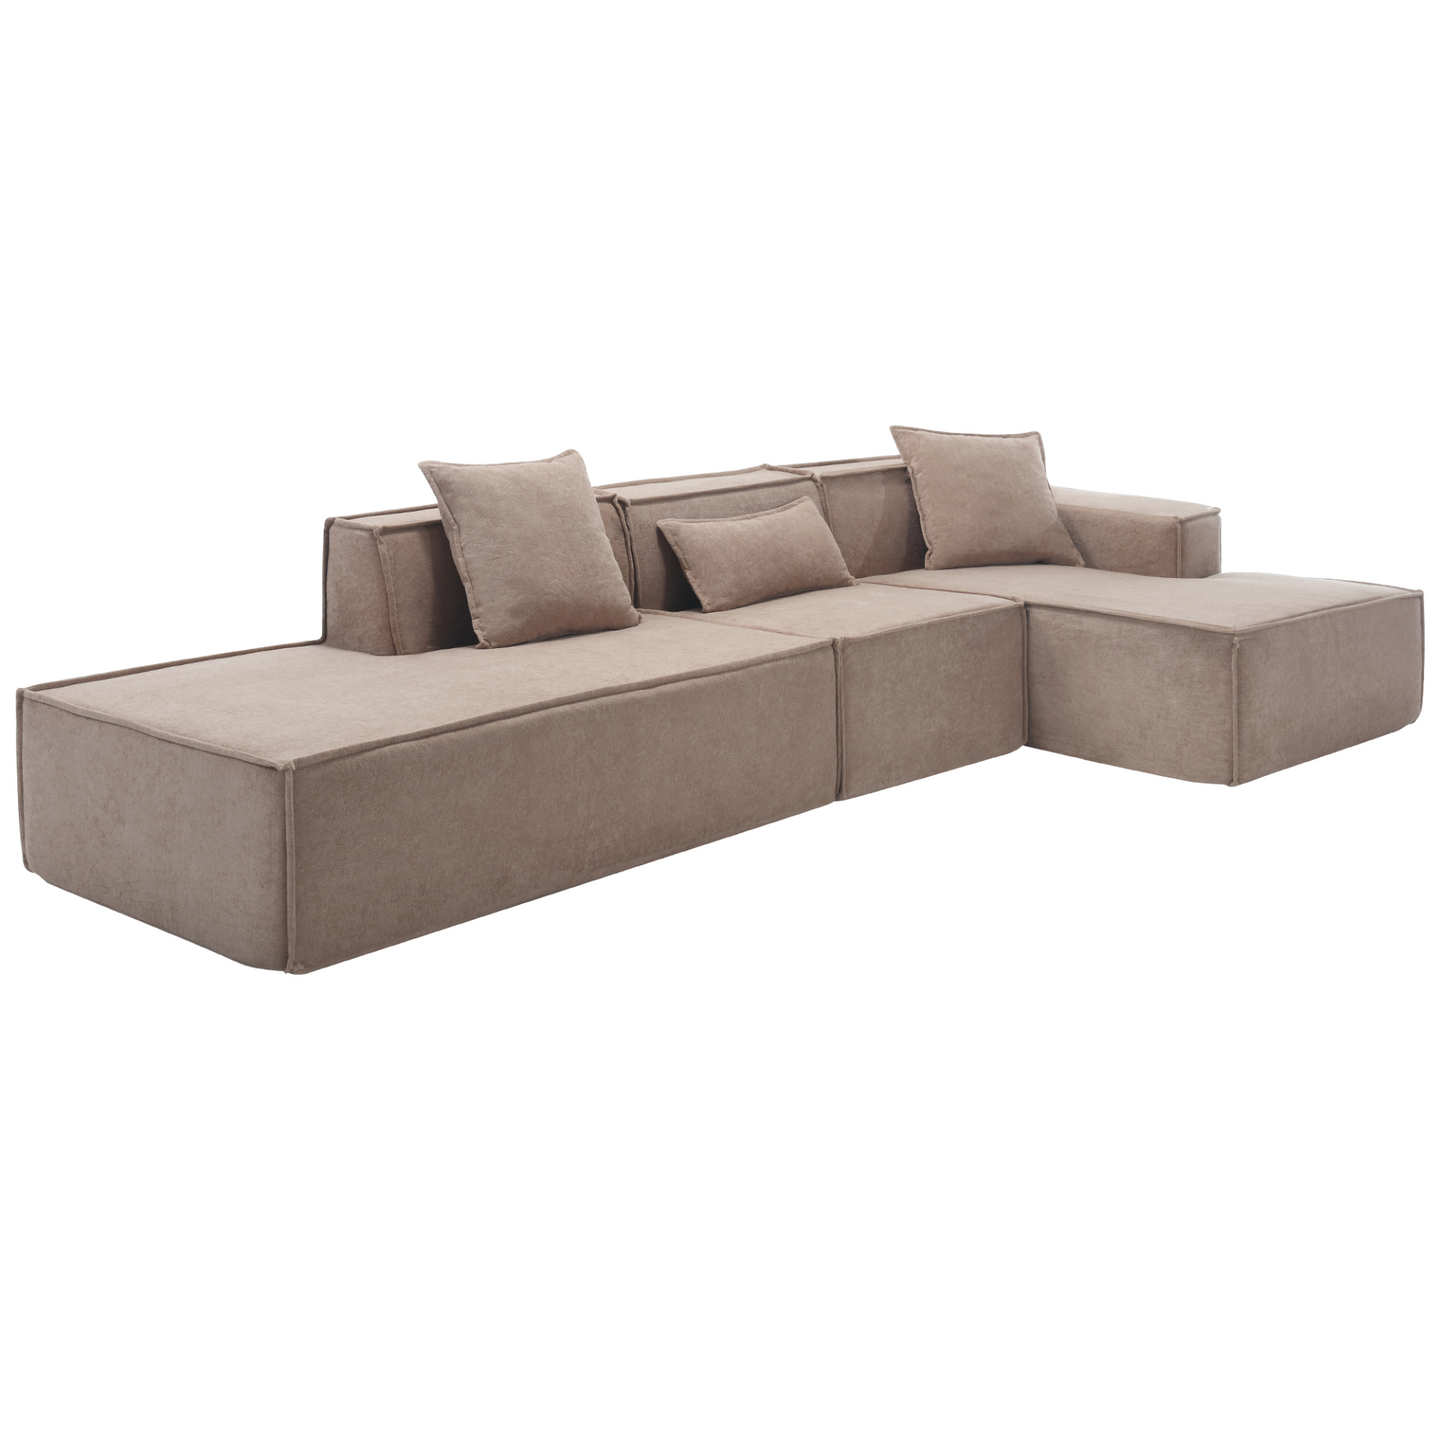 Modular combination living room sofa set, modern minimalist sofa, free installation sofa, L-shaped, Italian minimalist tofu block sofa,  Right-Hand Facing,Light Brown, Goodies N Stuff